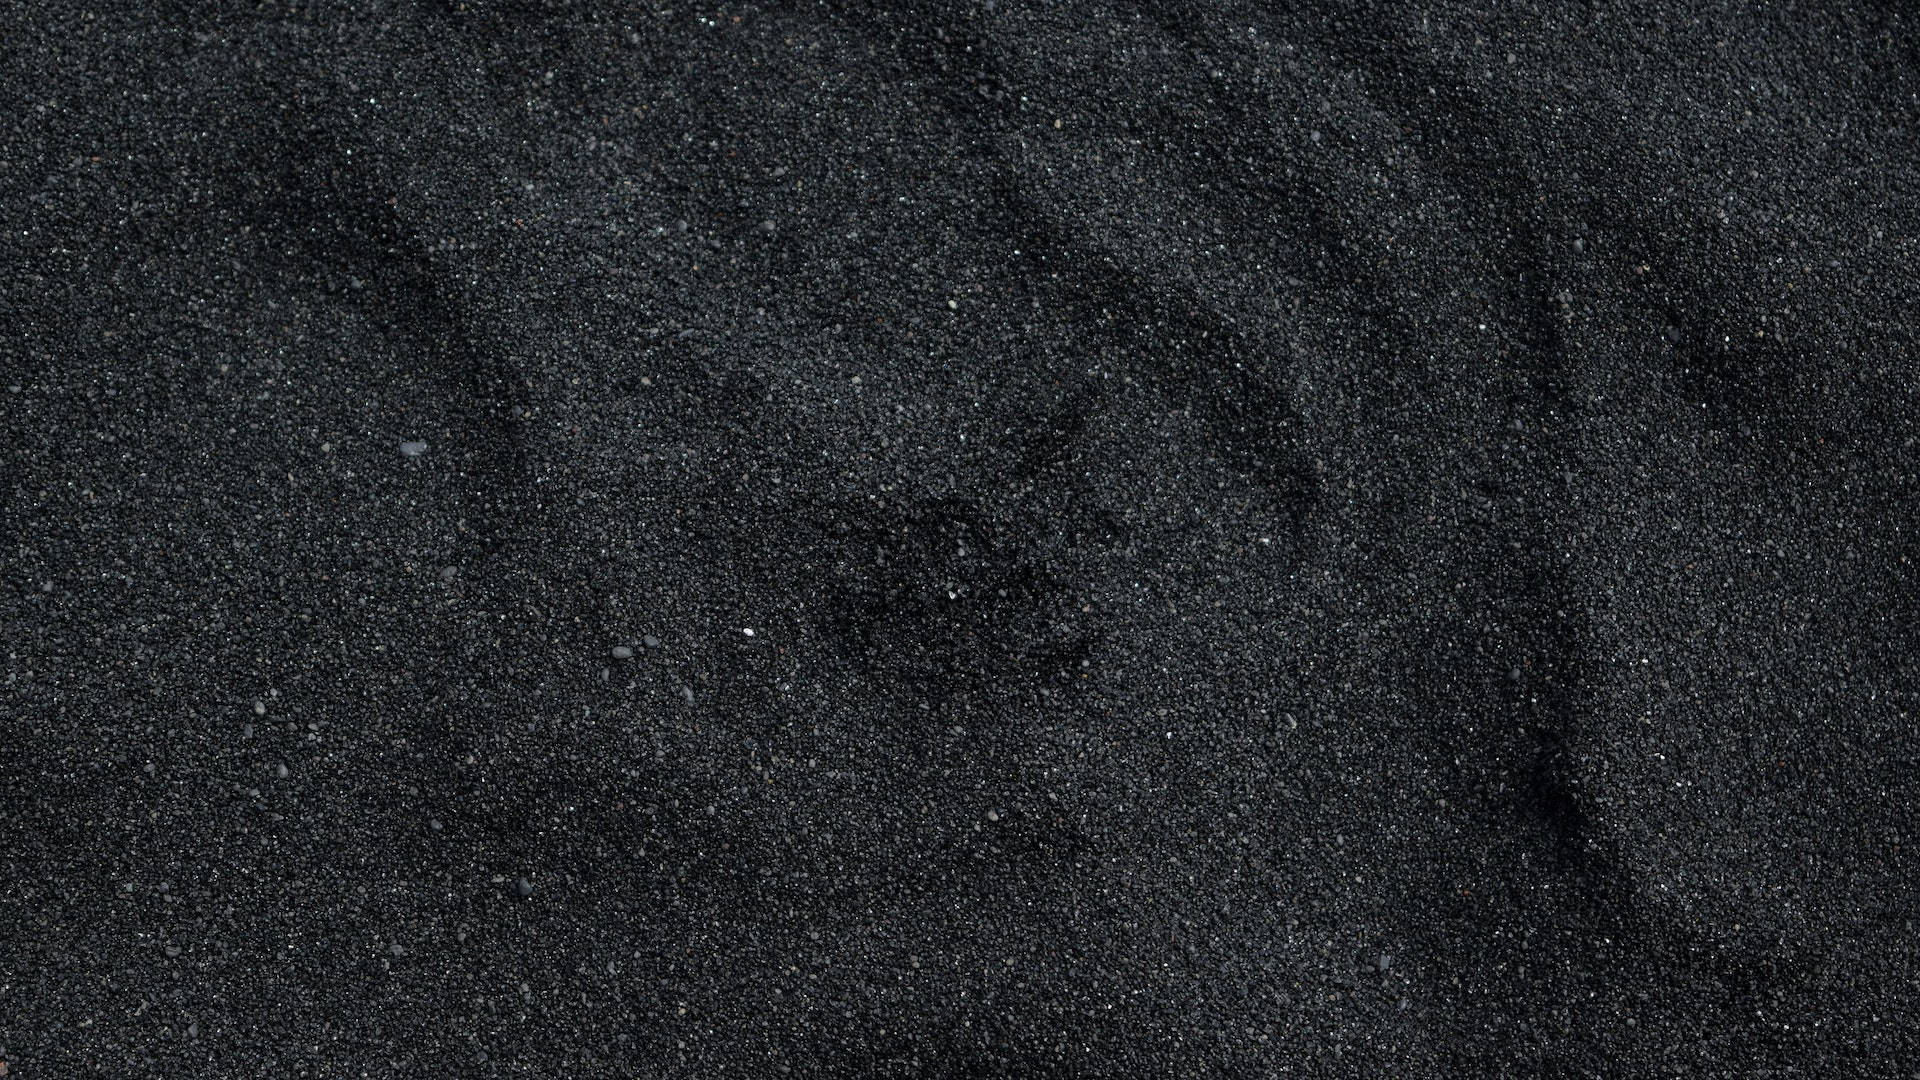 Black Desktop Grain Of Sand Wallpaper